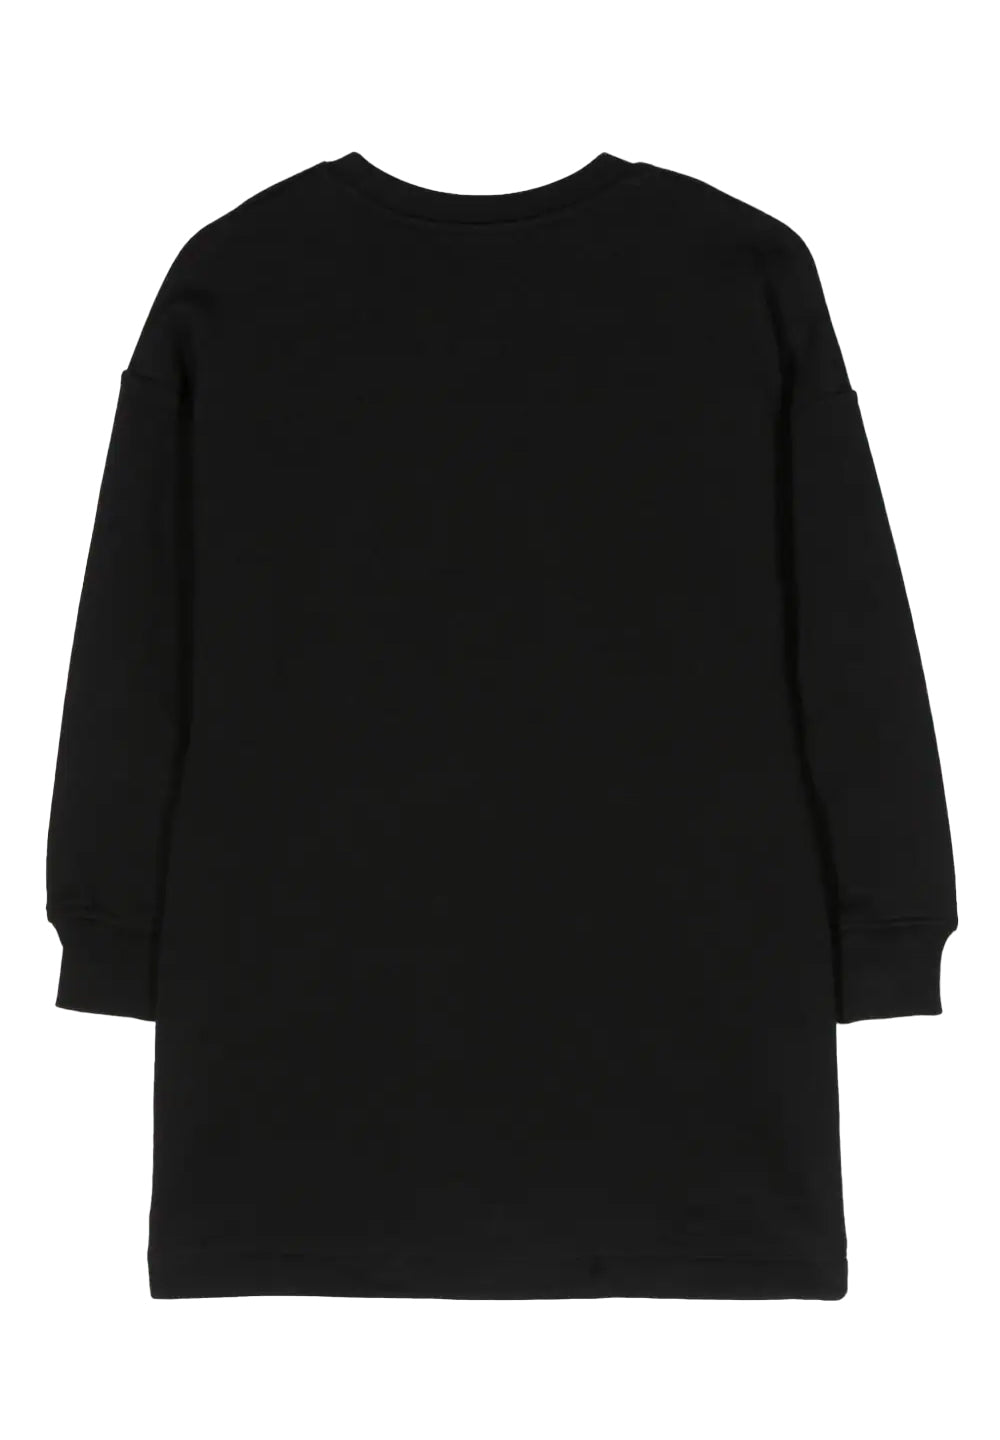 Black sweatshirt dress for girls